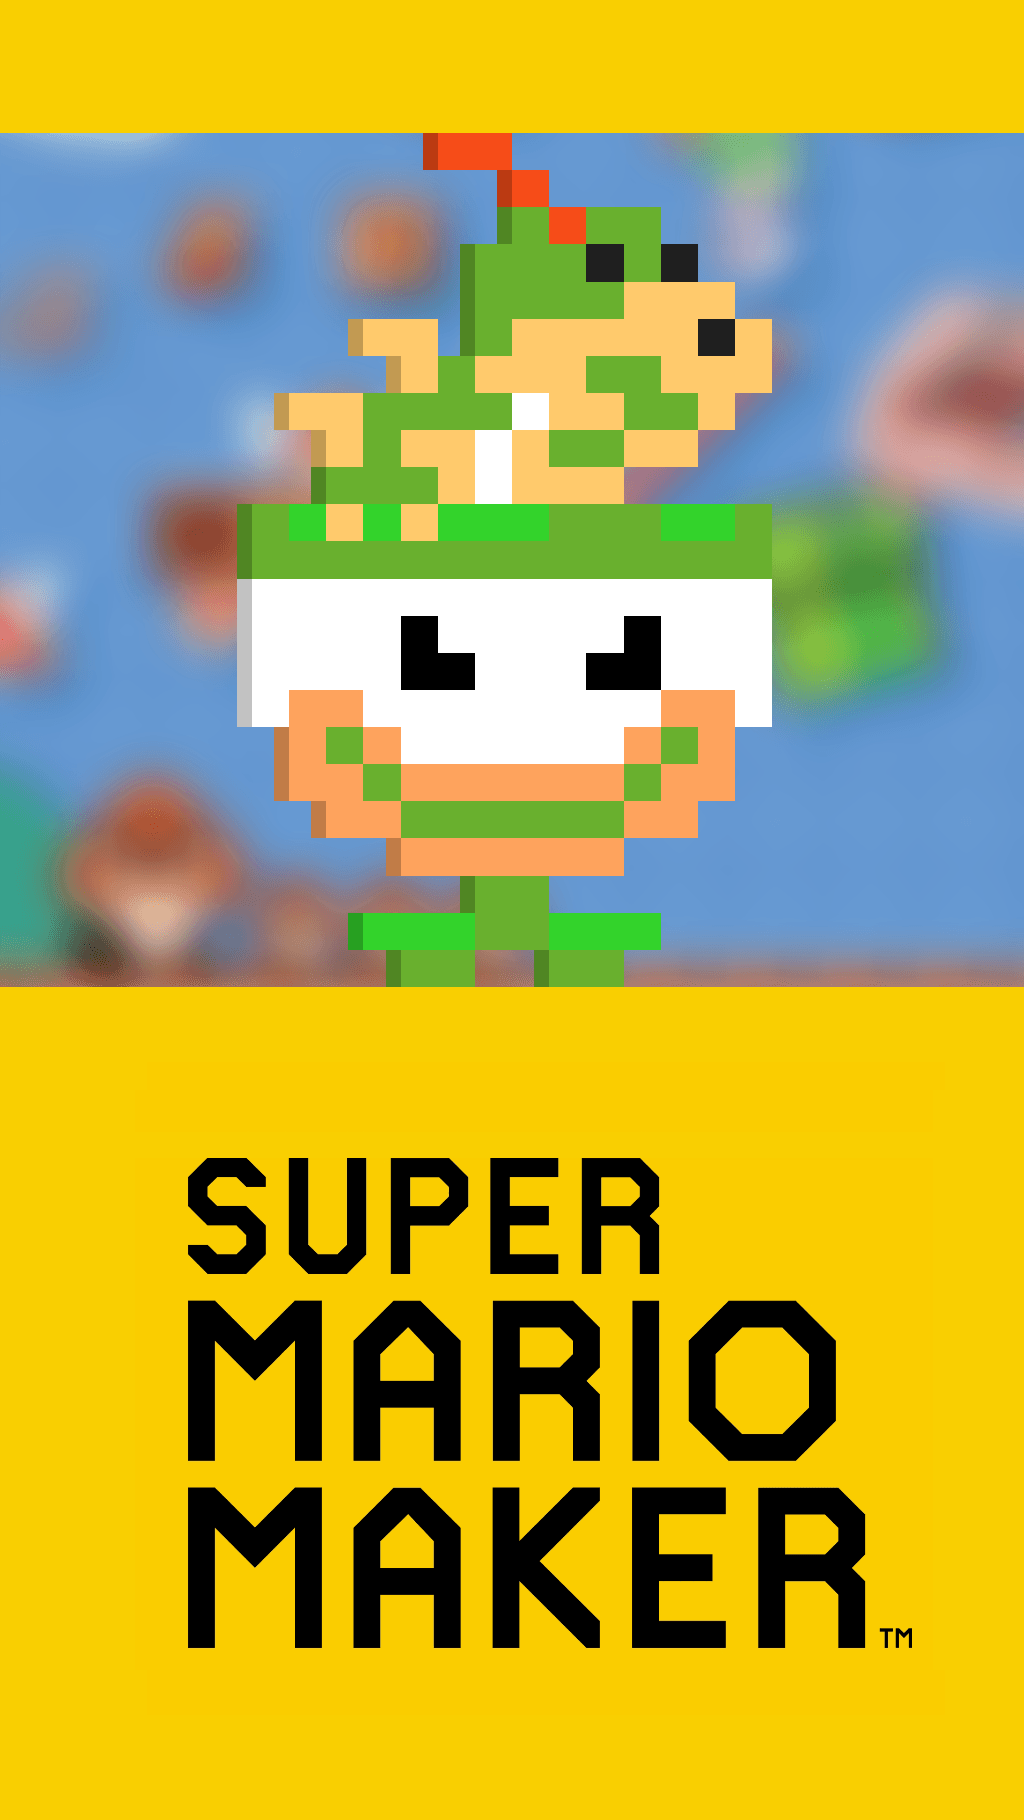 Bowser Jr. Mario Maker Wallpaper (Phone)